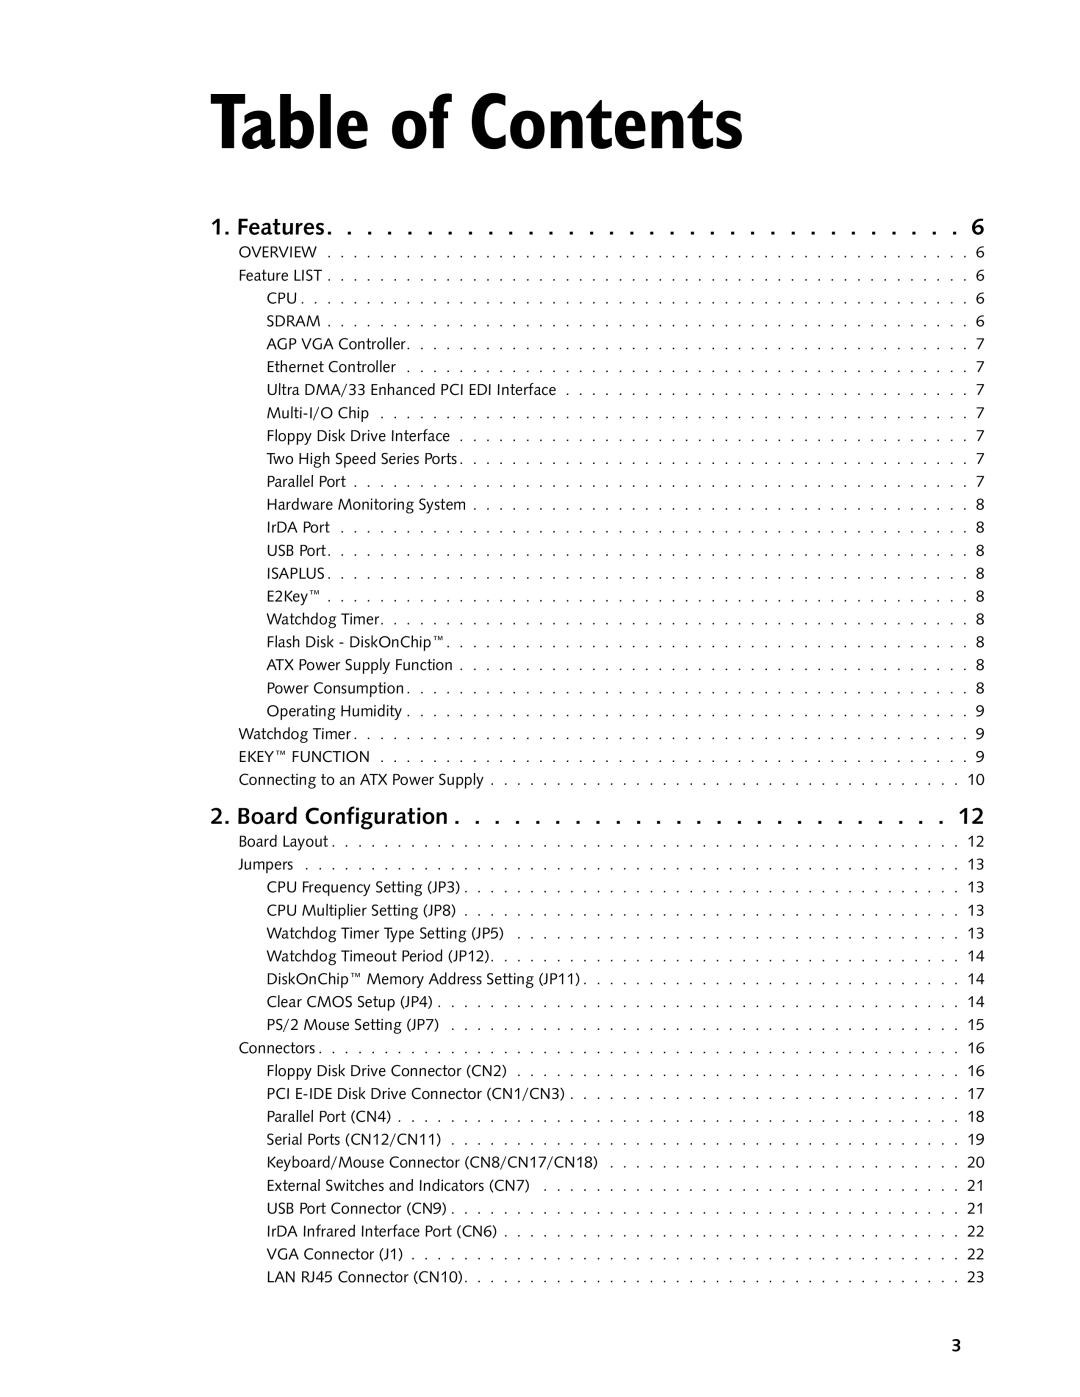 Intel SBC-370 manual Table of Contents 